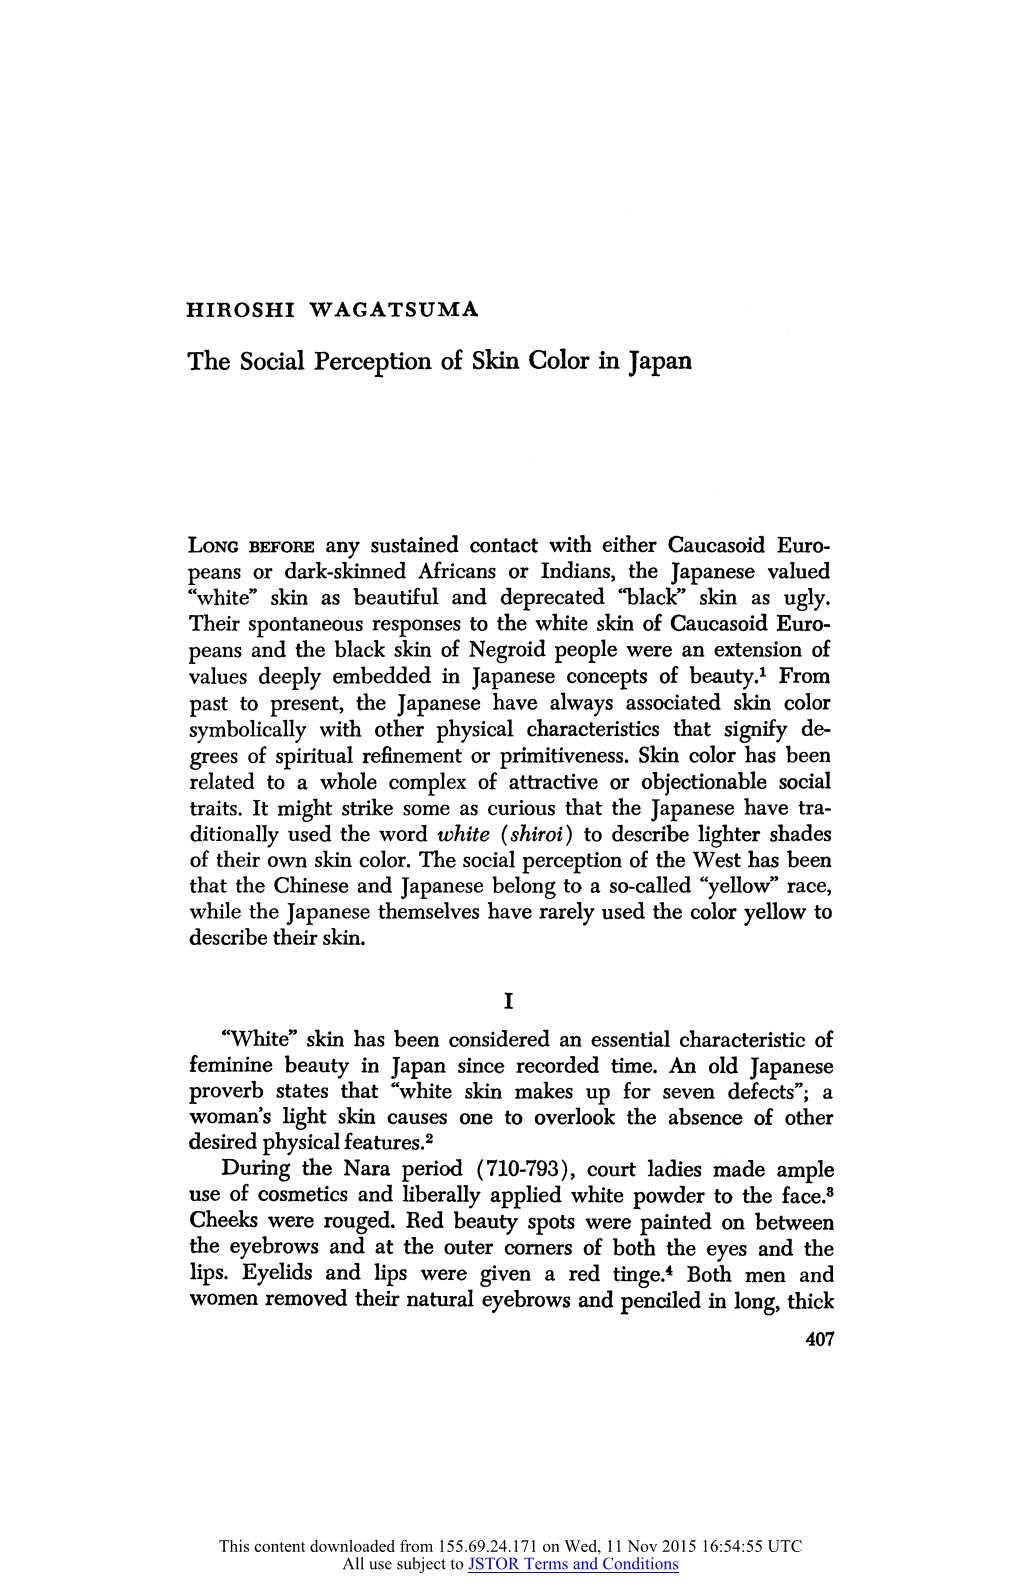 HIROSHI WAGATSUMA the Social Perception of Skin Color in Japan